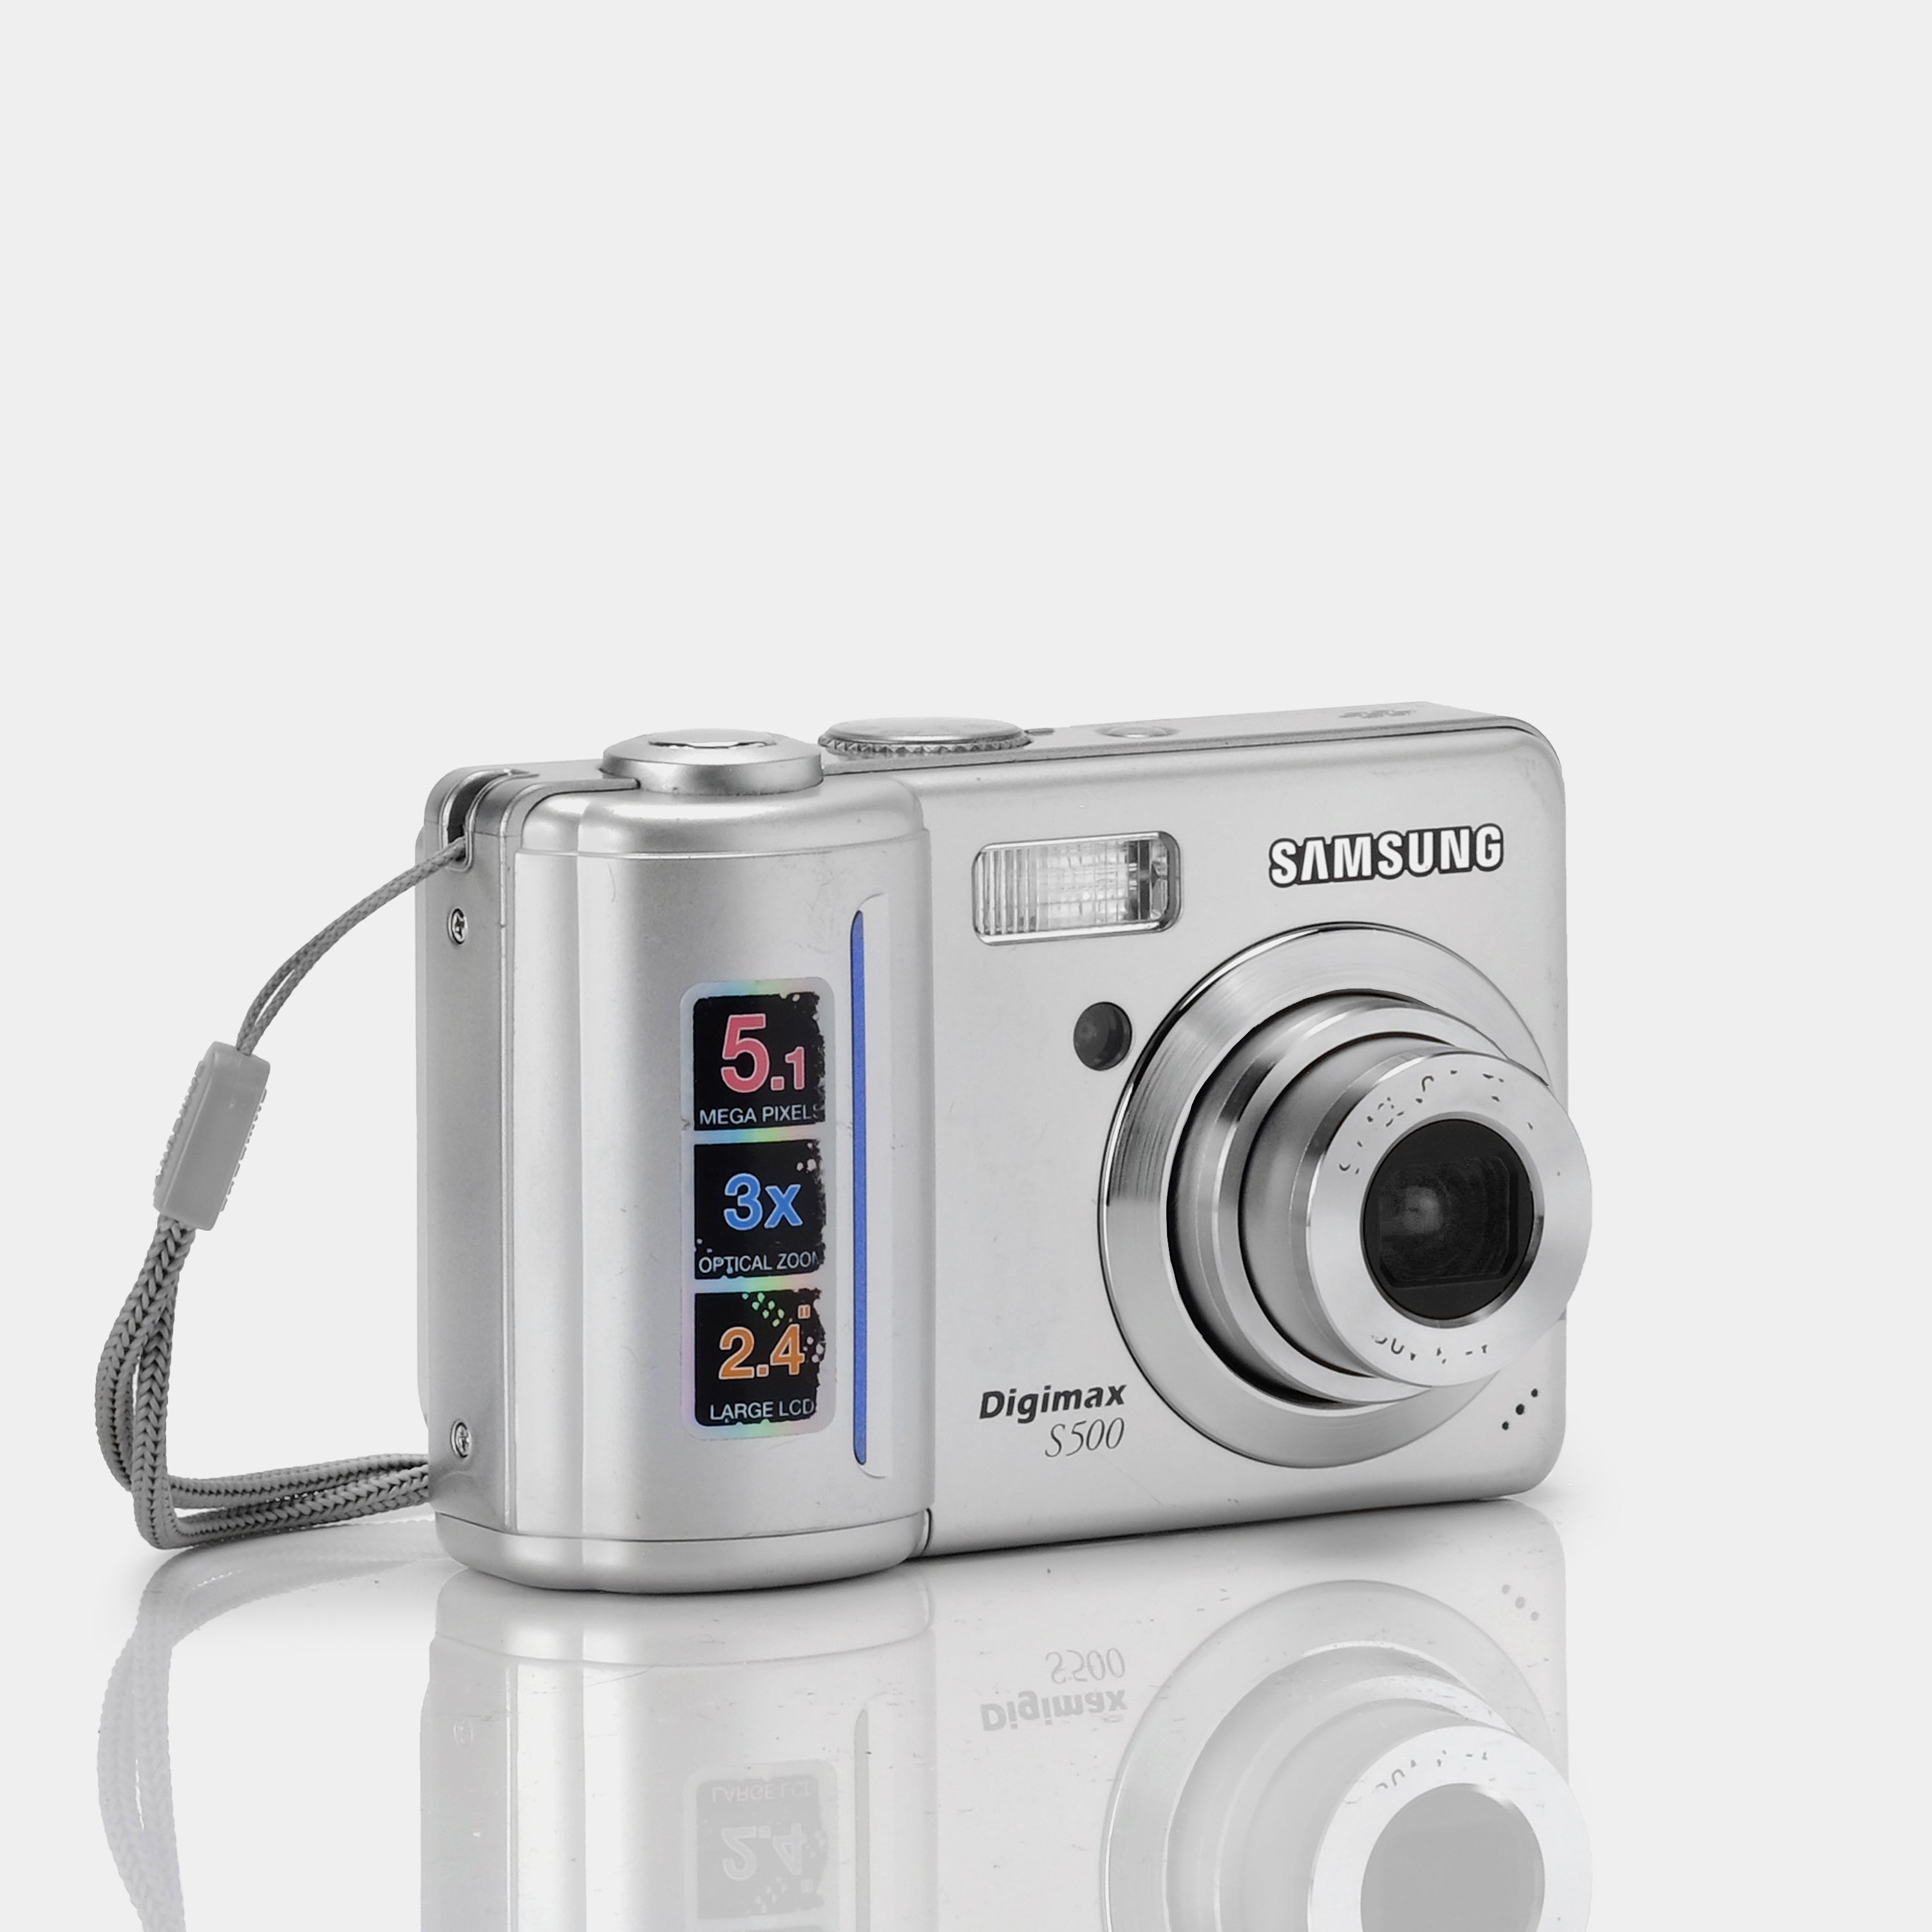 Samsung Digimax S500 Point and Shoot Digital Camera